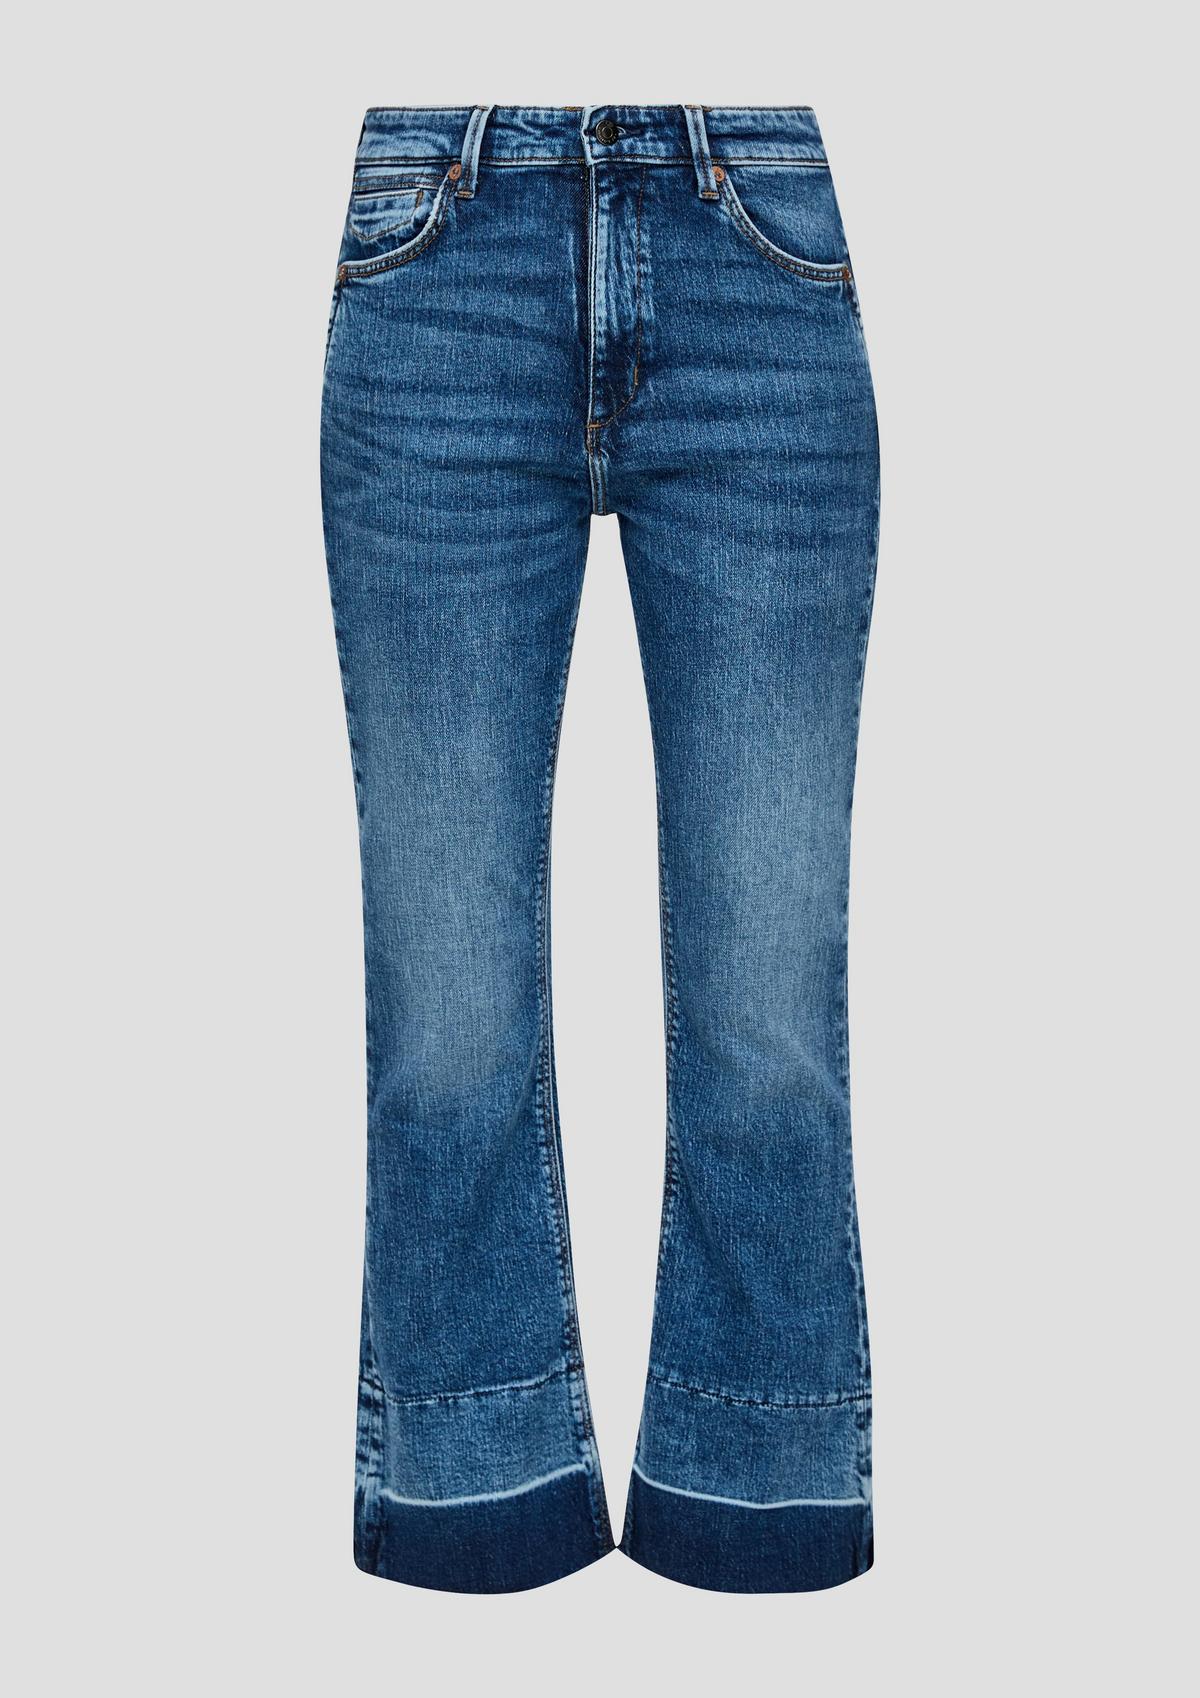 Reena cropped jeans / Slim fit / High rise / Flared leg - blue